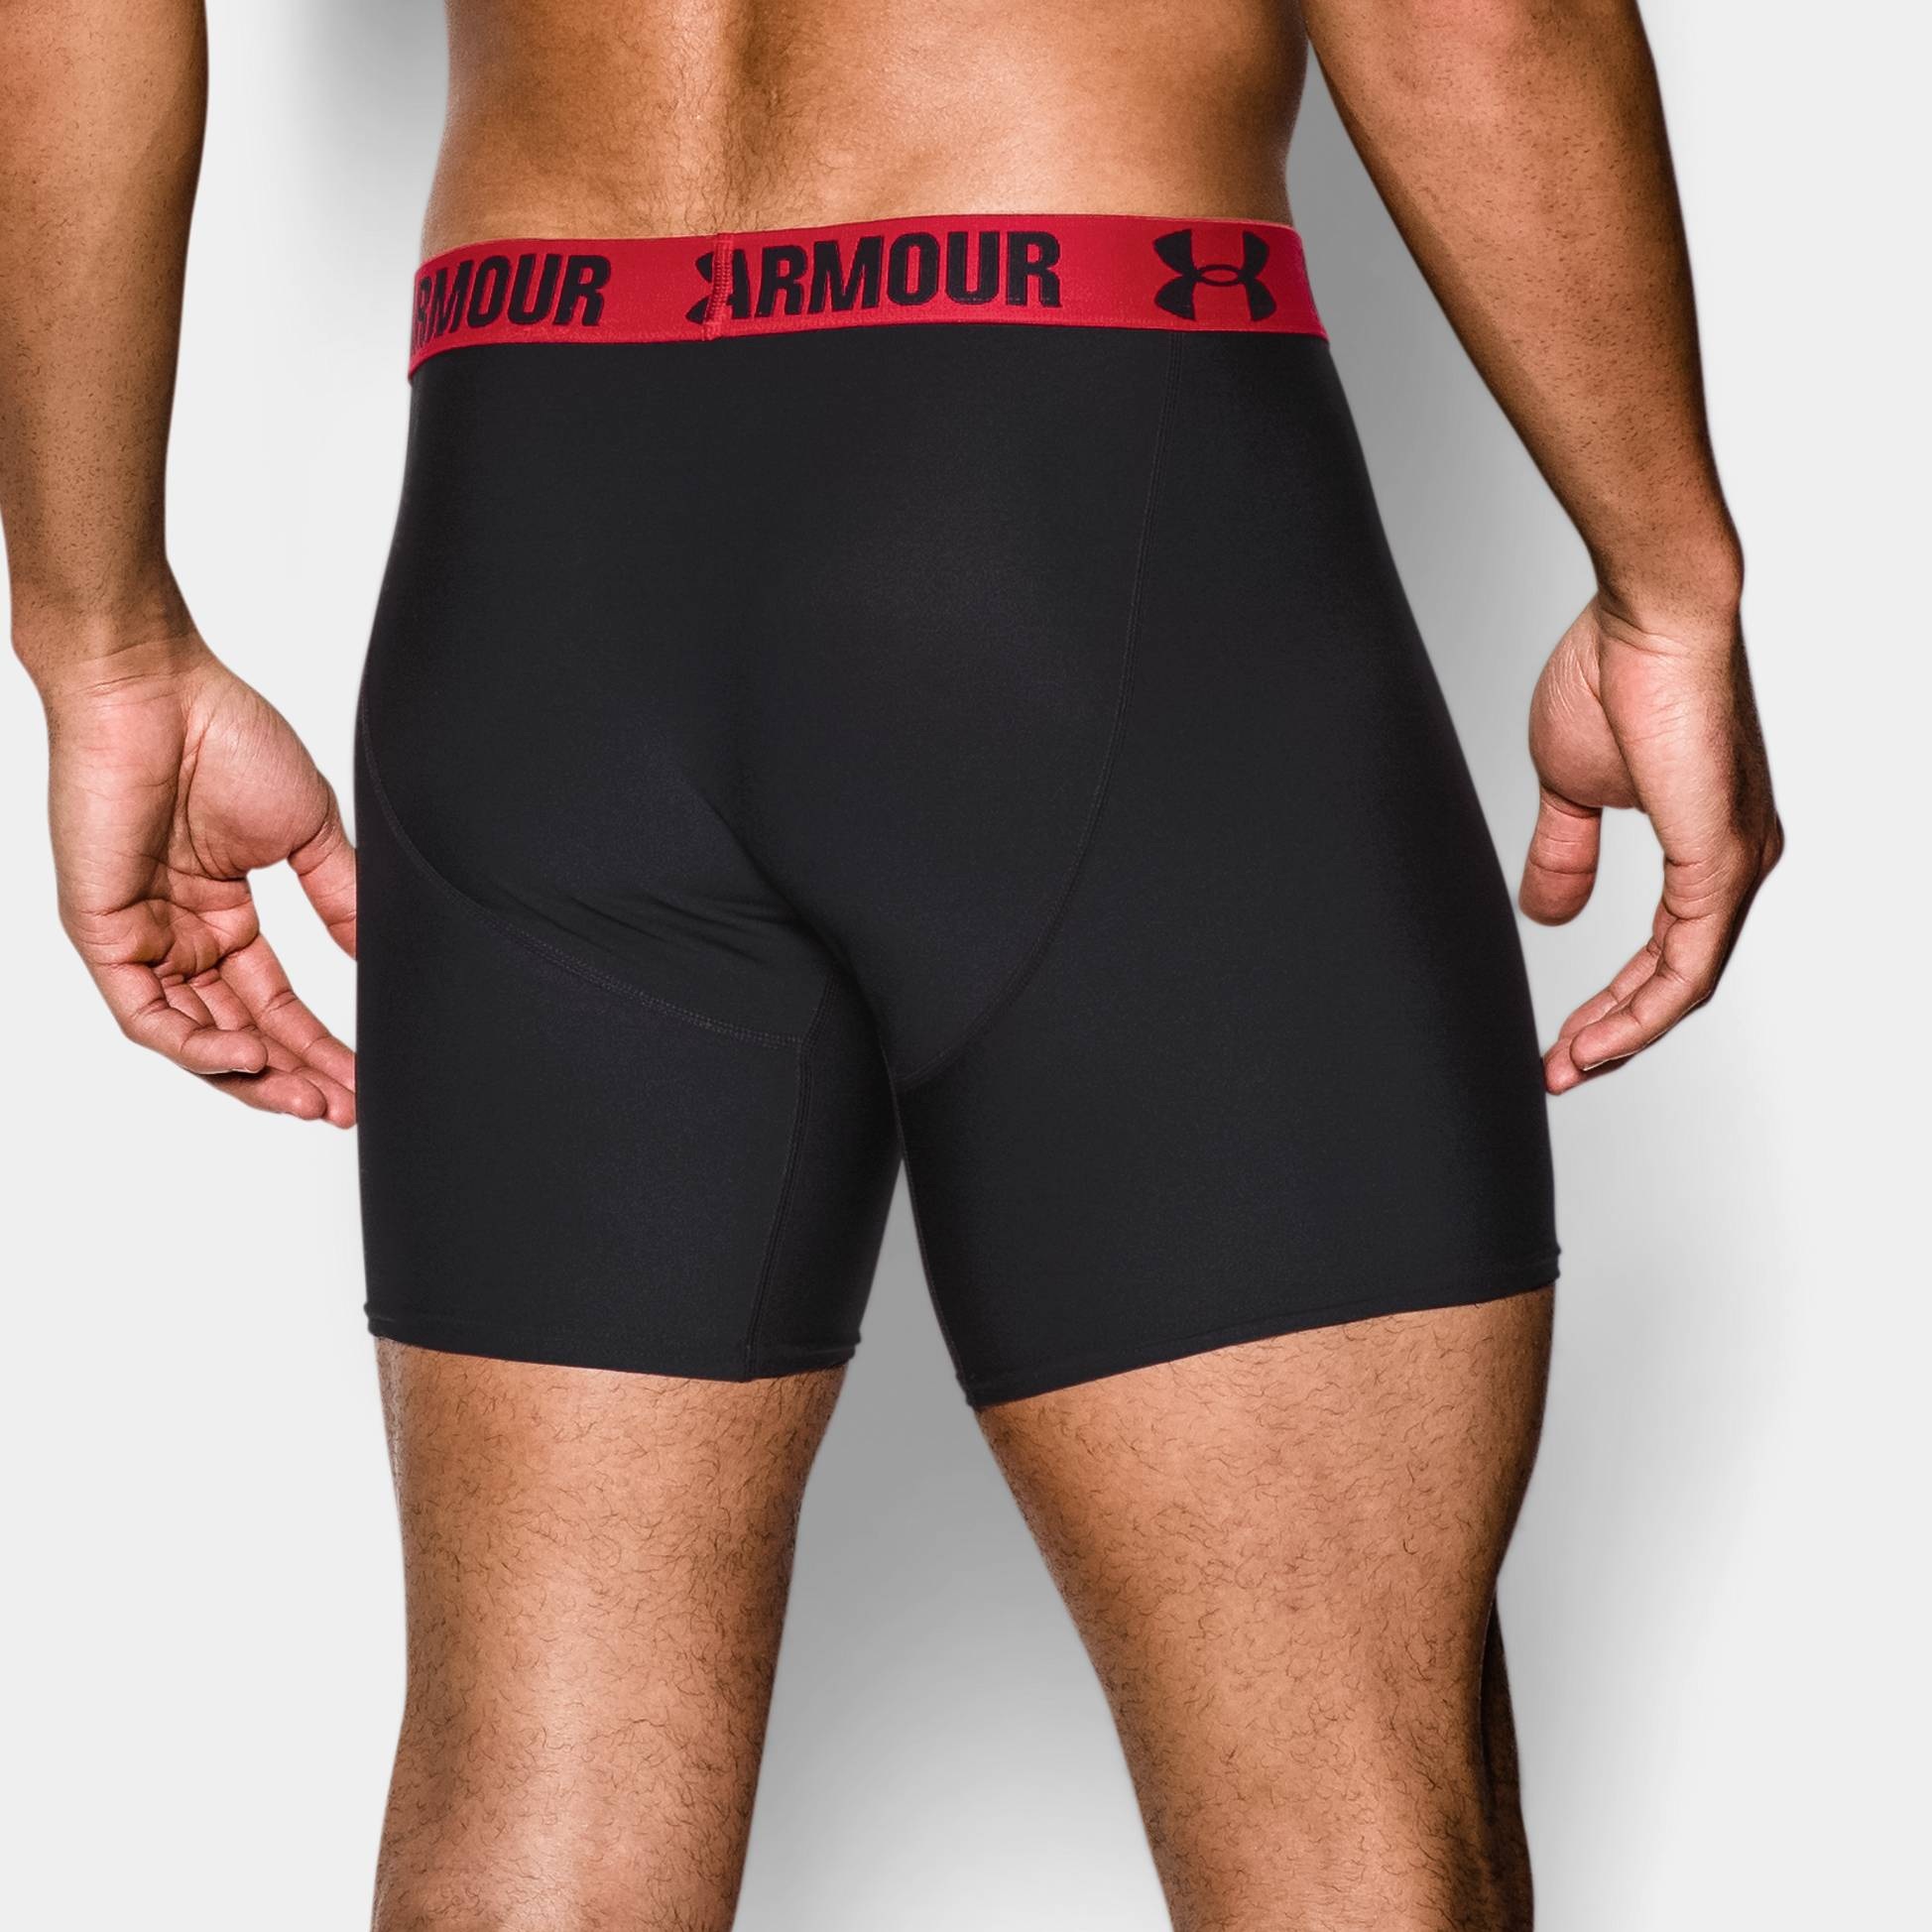 Underwear -  under armour Performance Boxerjock 2 Pack